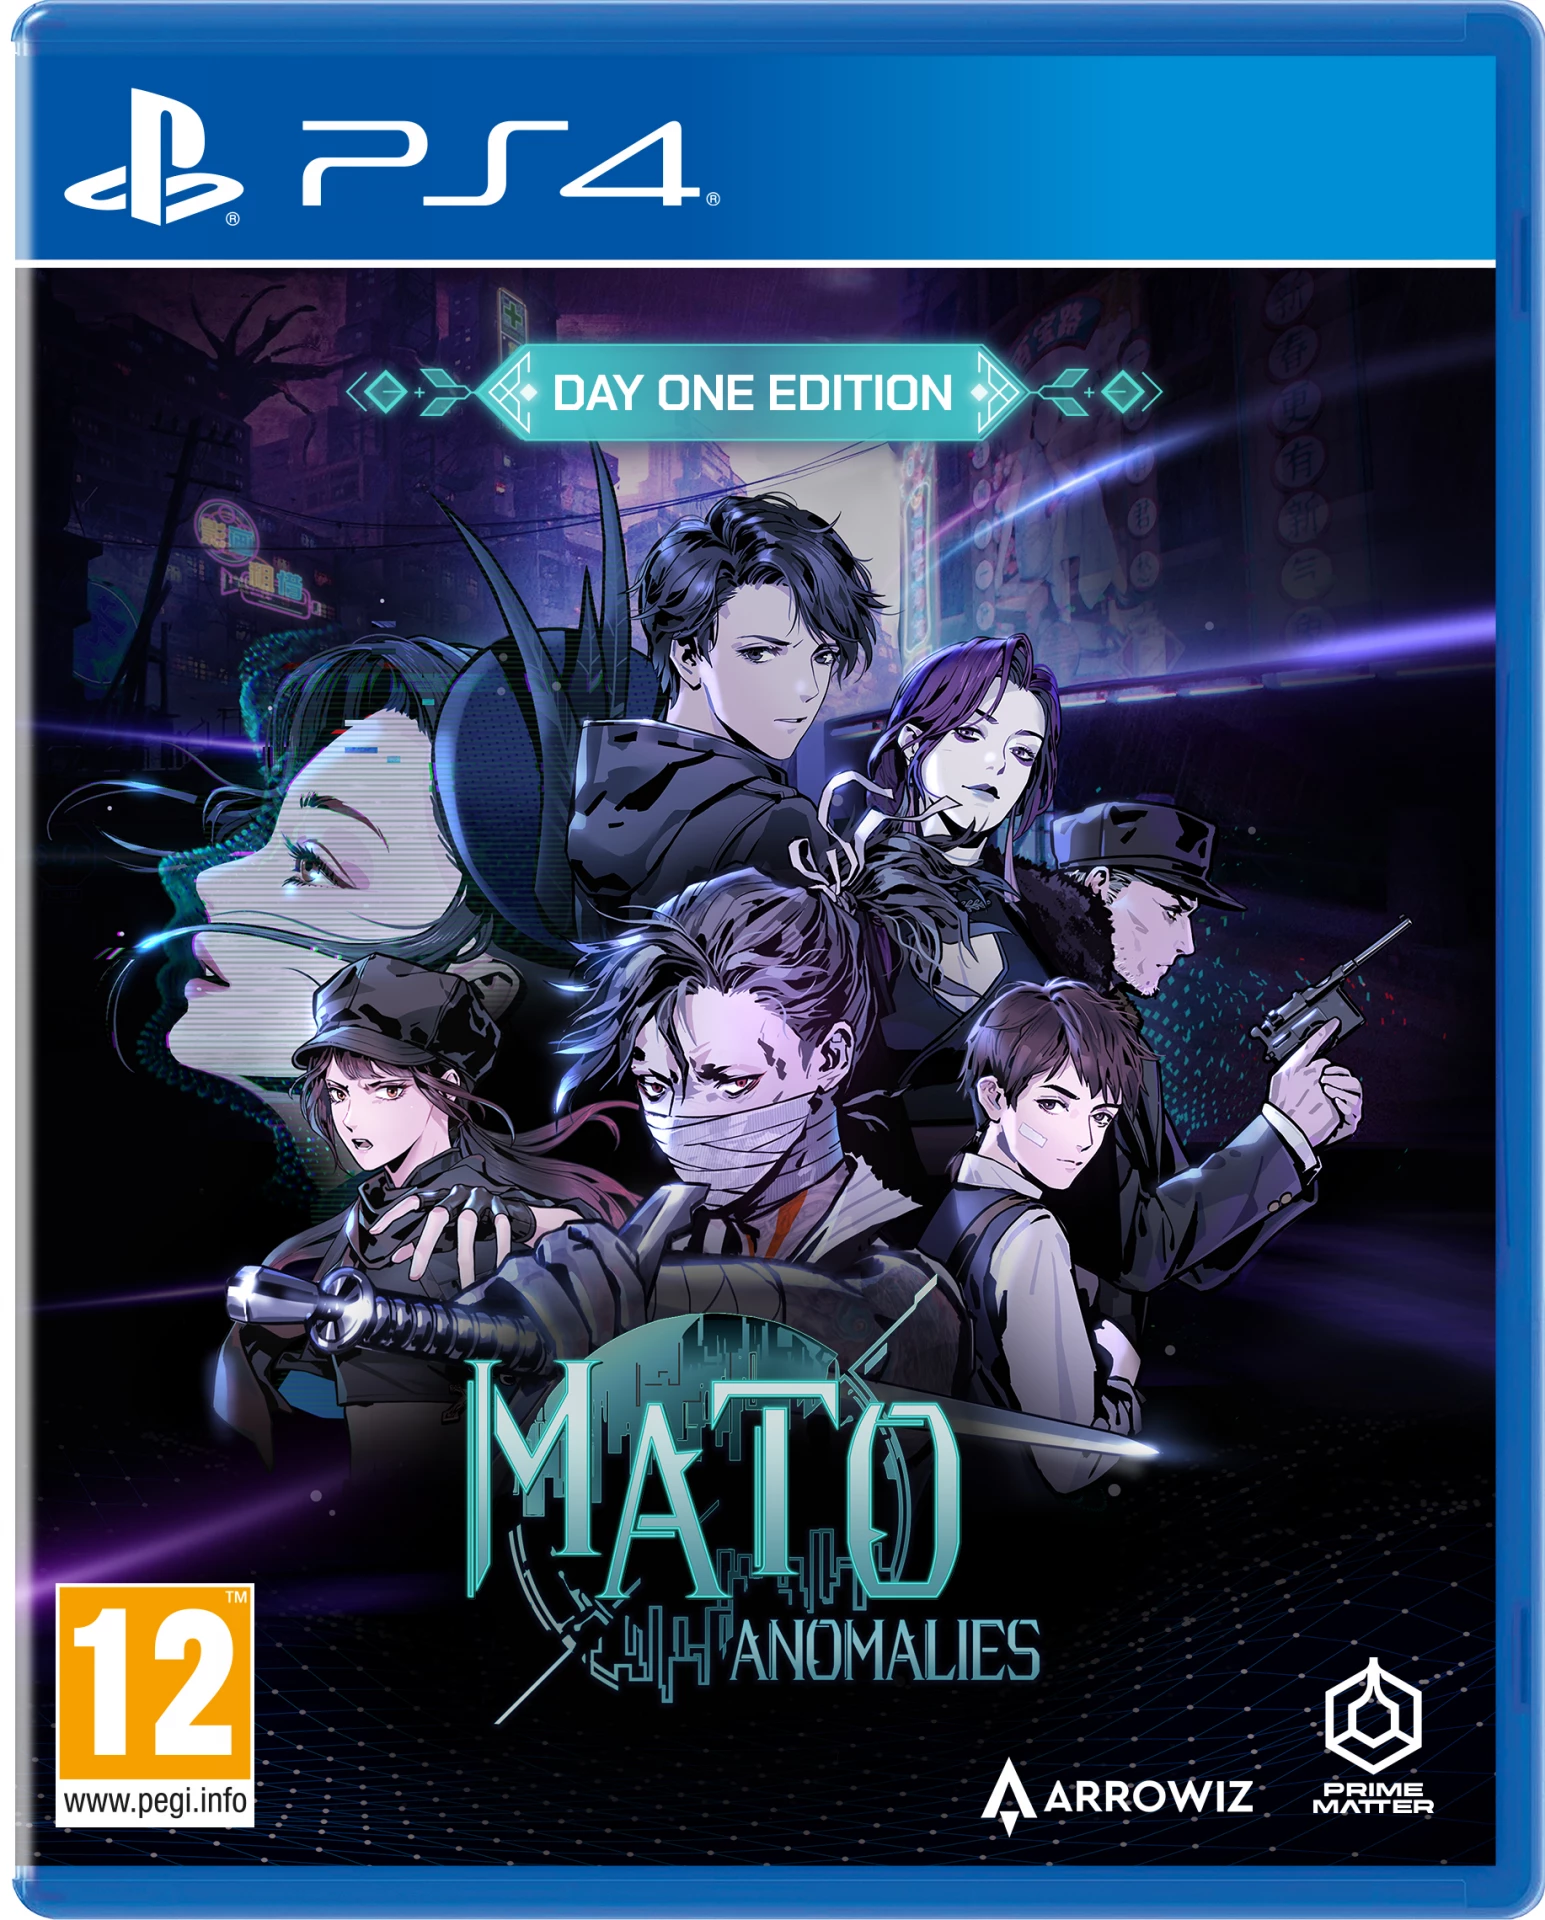 Mato: Anomalies - Day One Edition (PS4), Arrowiz, Prime Matter